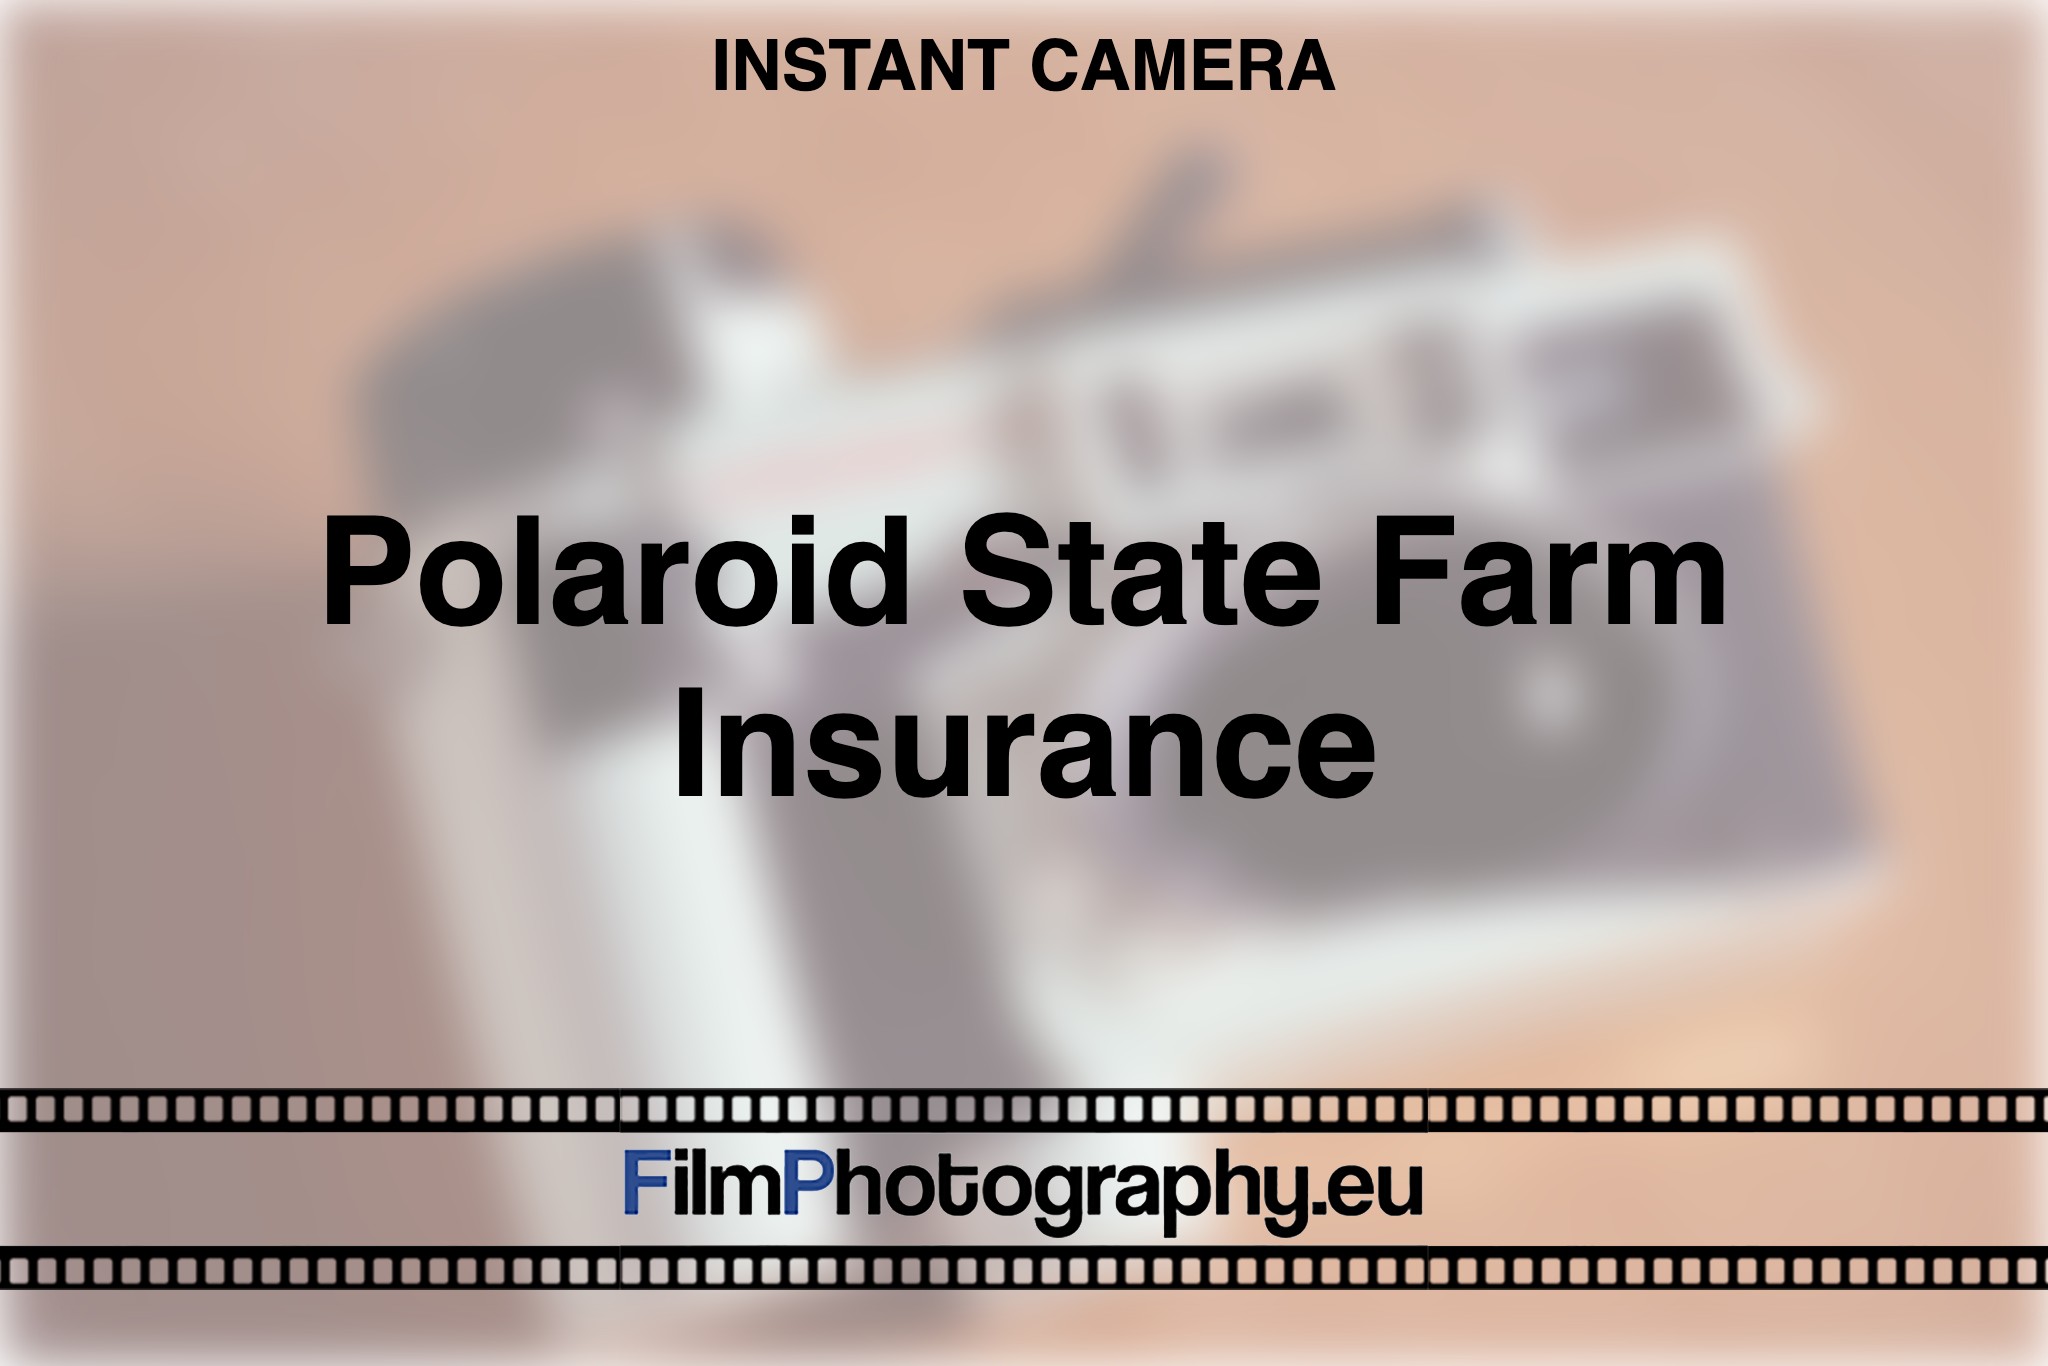 polaroid-state-farm-insurance-instant-camera-bnv